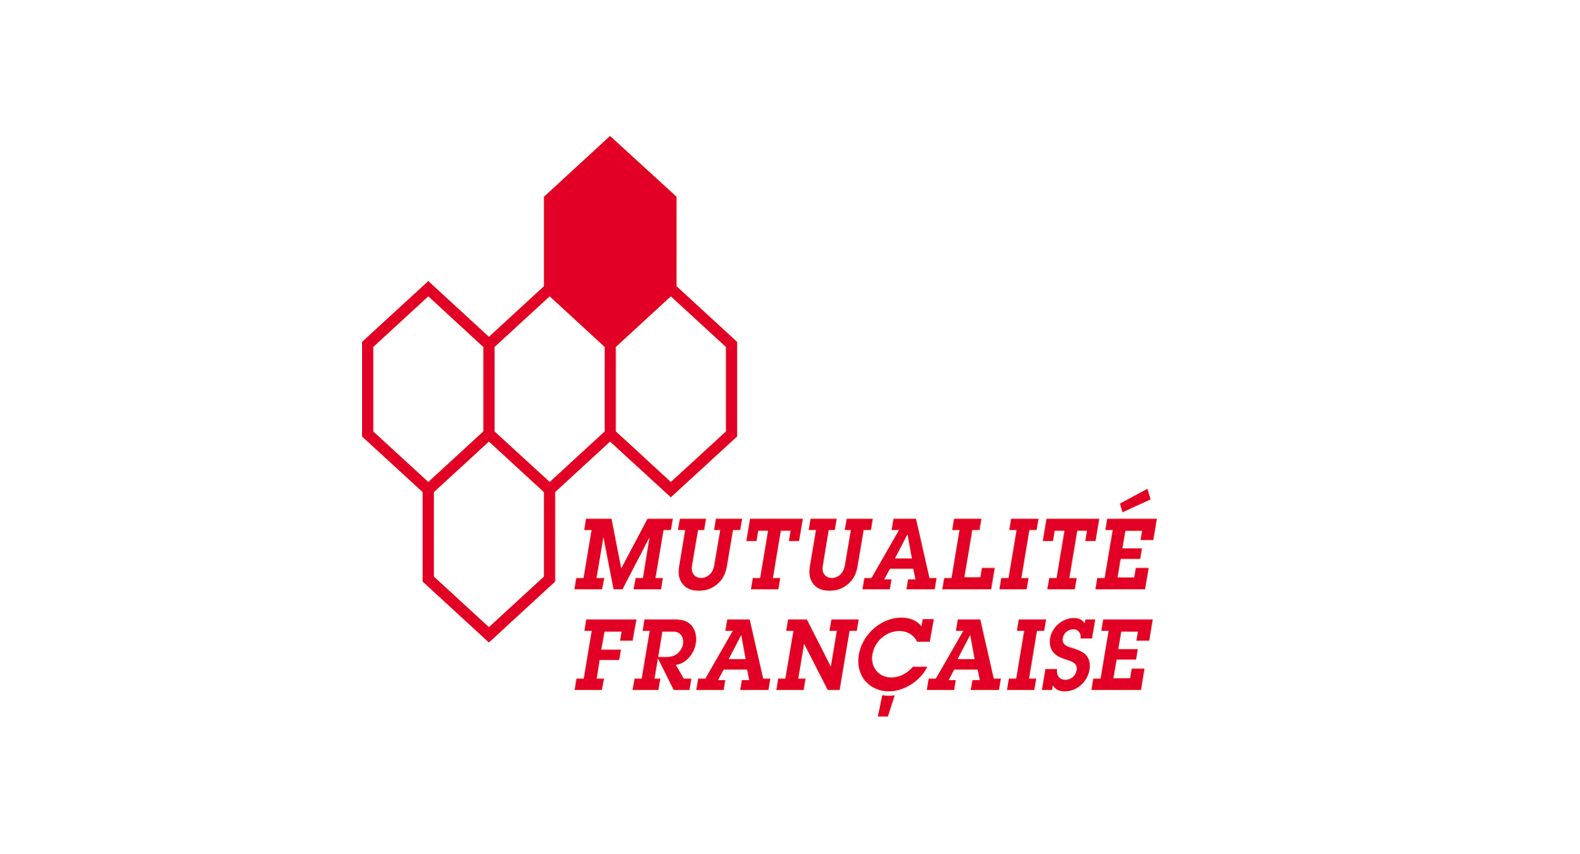 logo mutualité française